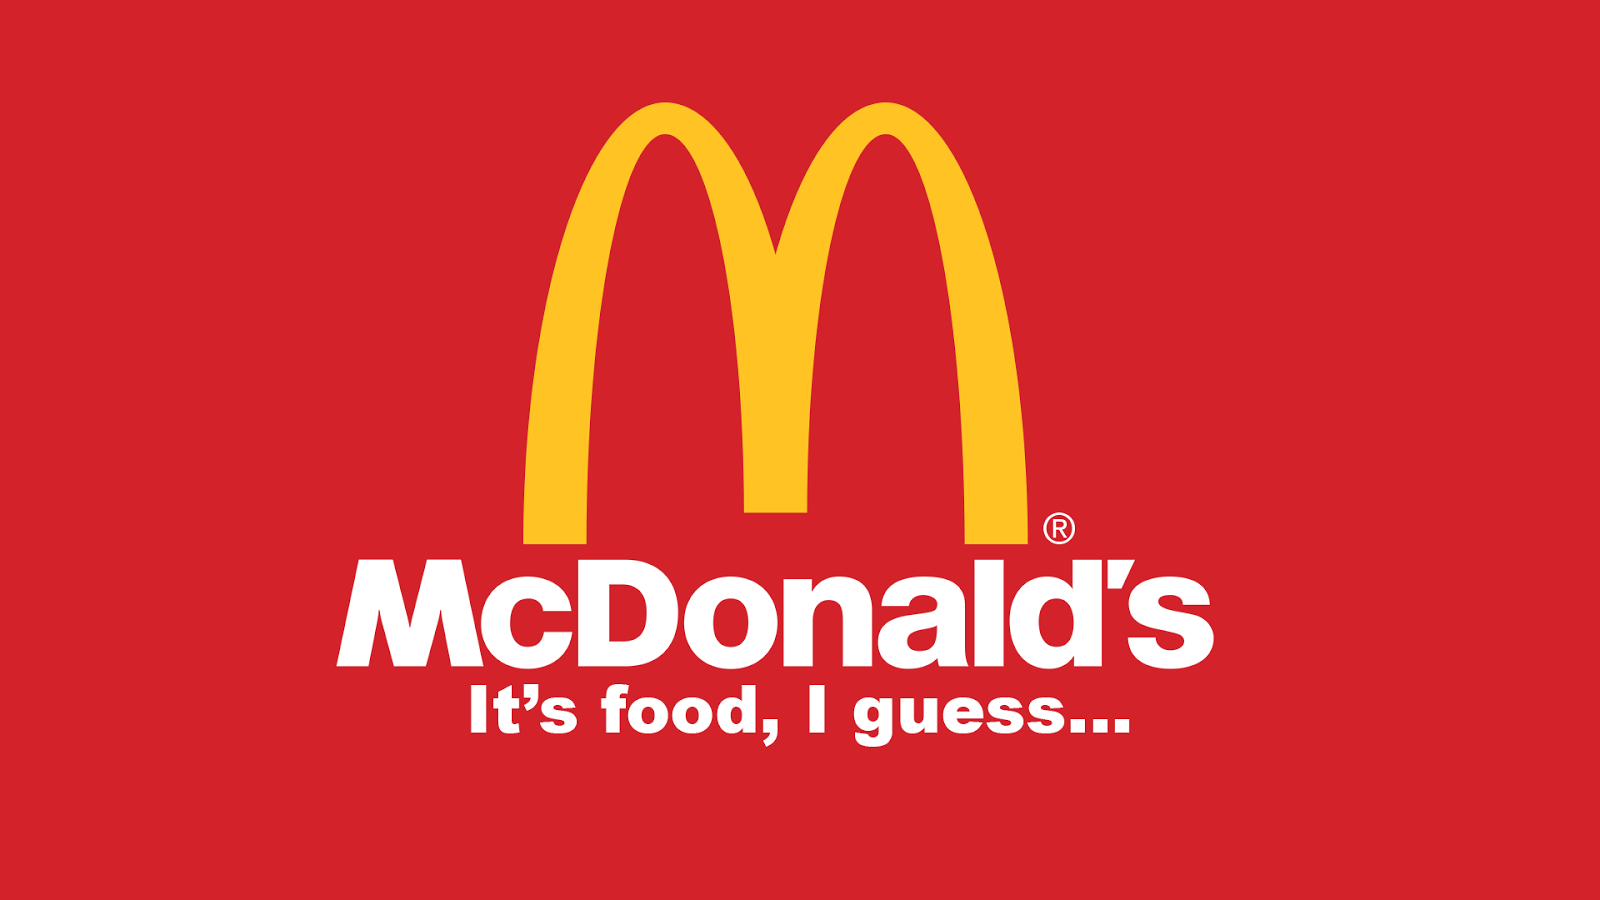 Макдональдс пенза. Реклама макдональдс. Баннер Макдоналдс. Рекламные плакаты макдональдс. Лозунг Макдональдса.